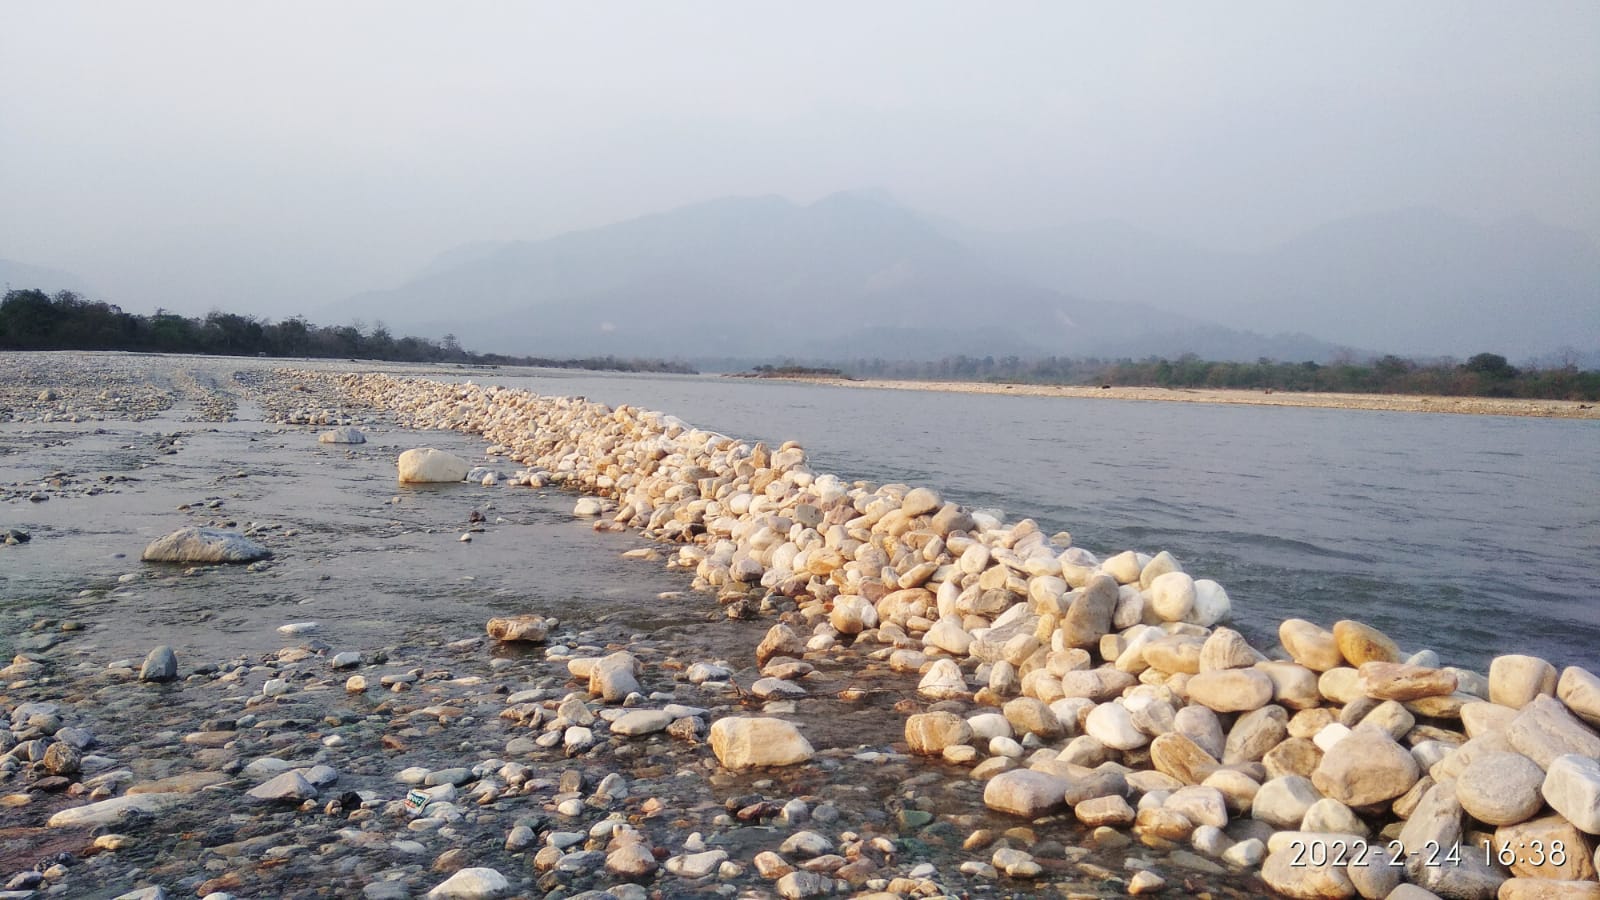 water scarcity in the indo-bhutan border area of alipurduar